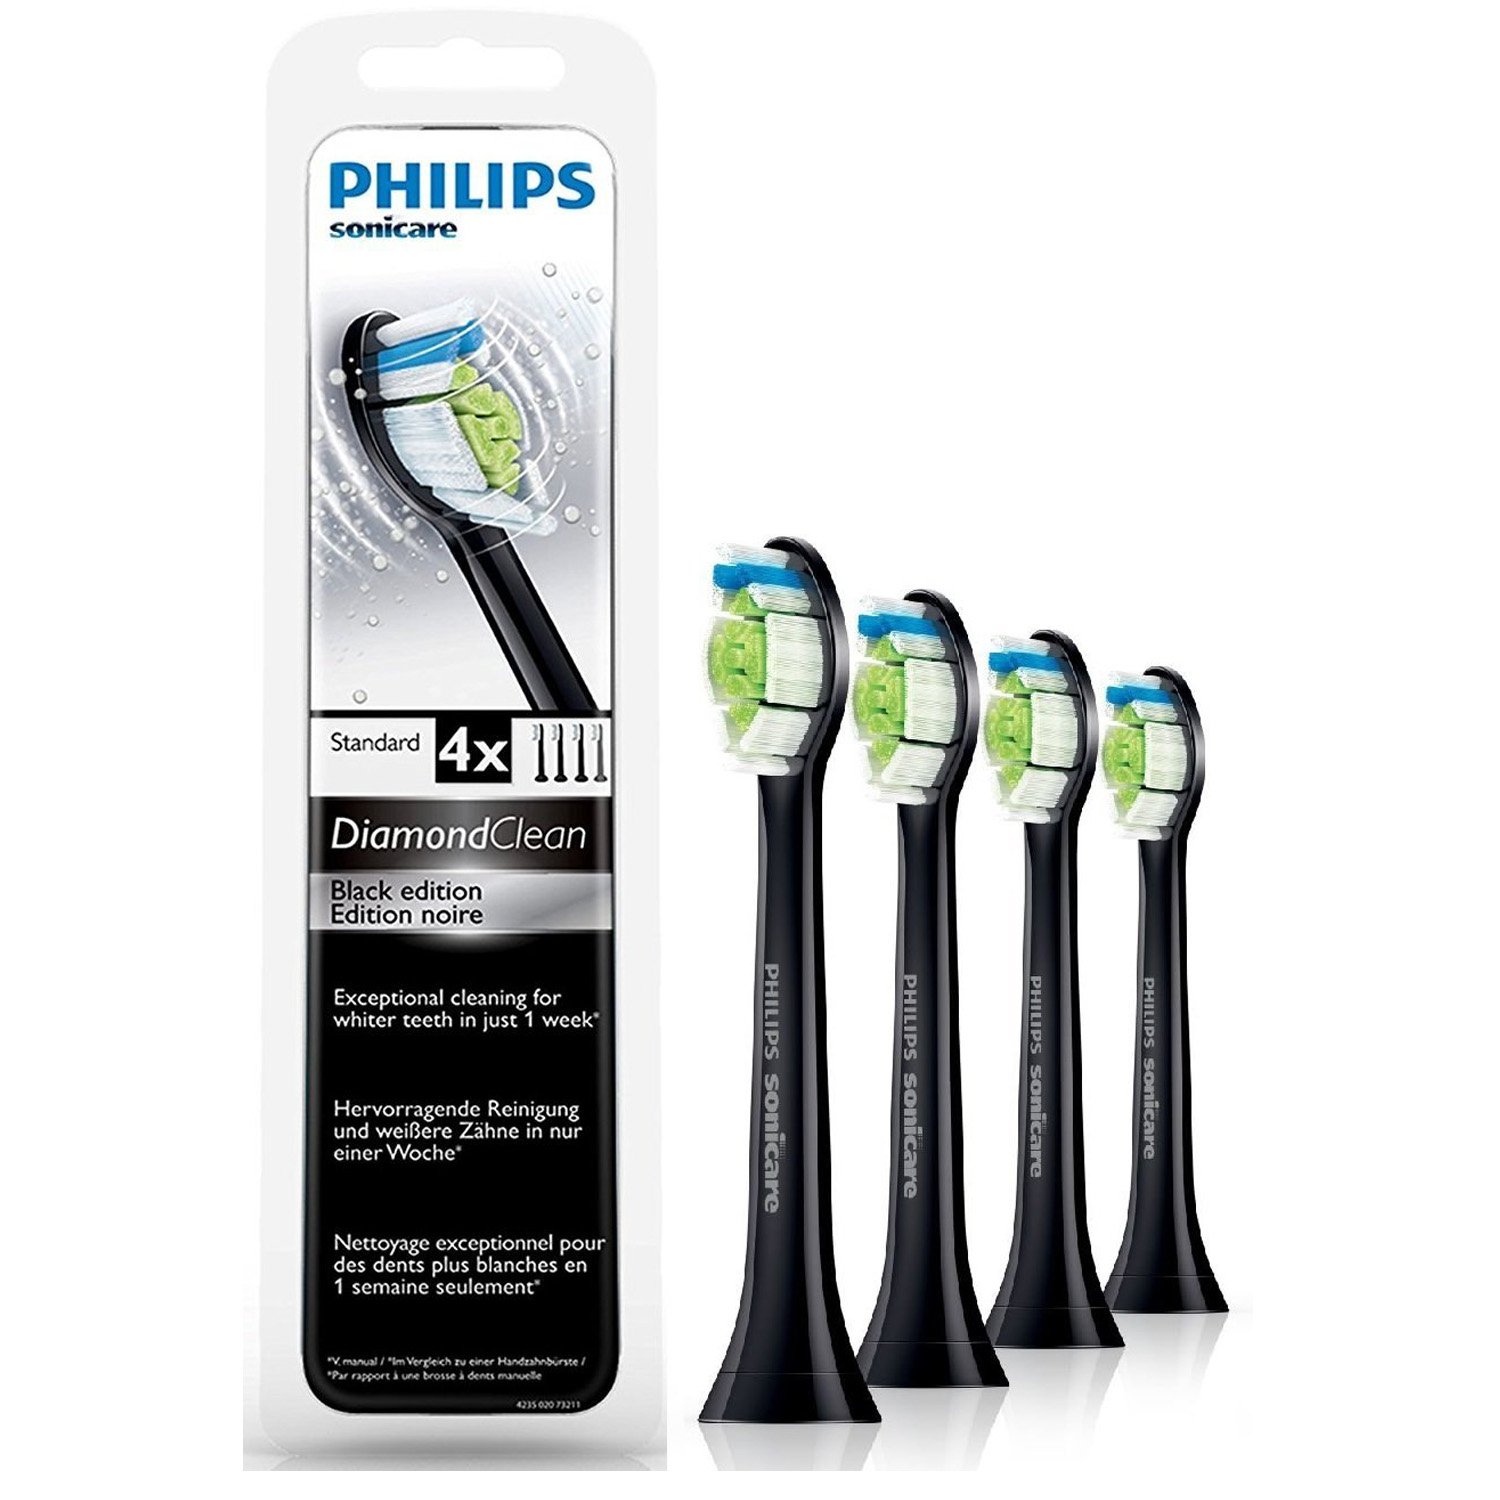 Phillips Diamond Clean Toothbrush Heads